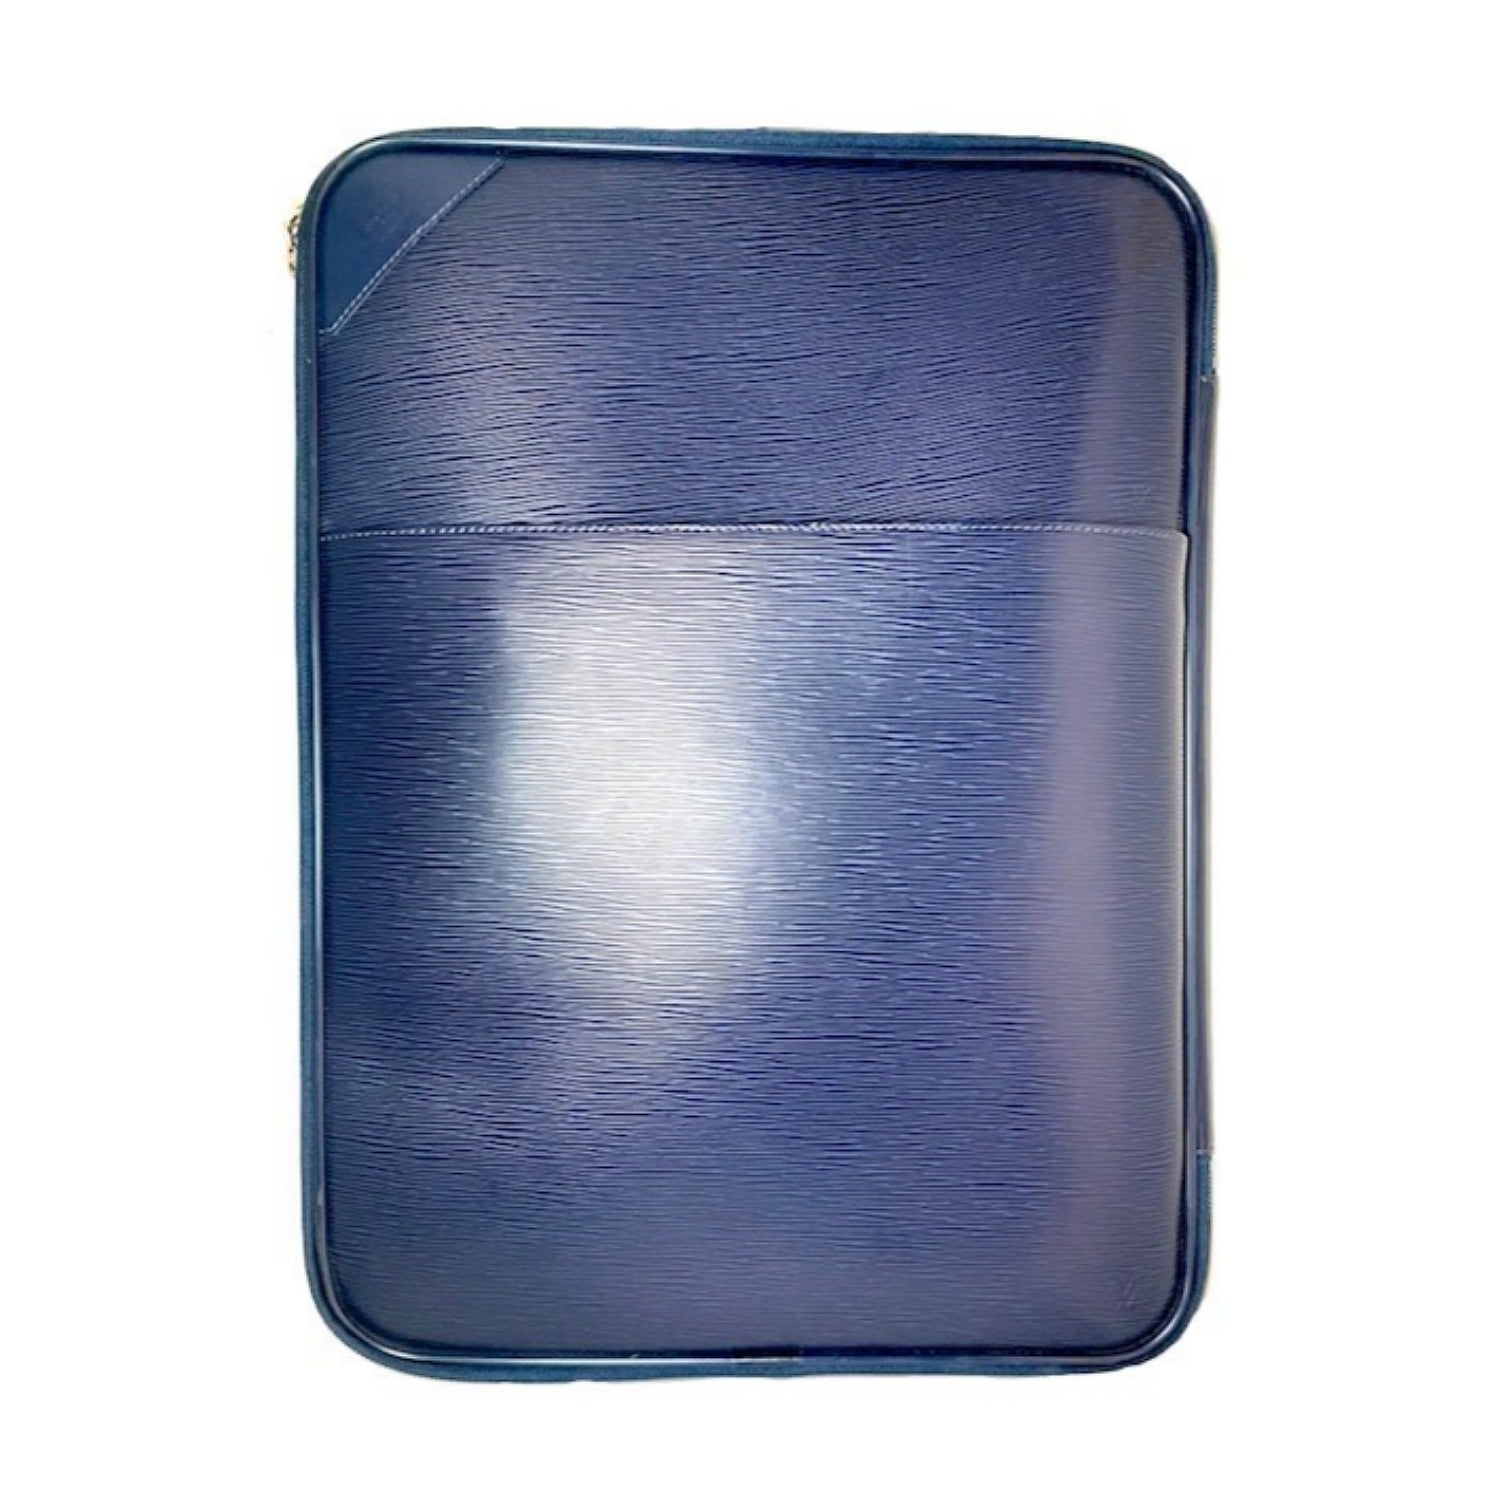 Louis Vuitton Pegase Monogram Travel Carry Bag Suitcase 55 Used